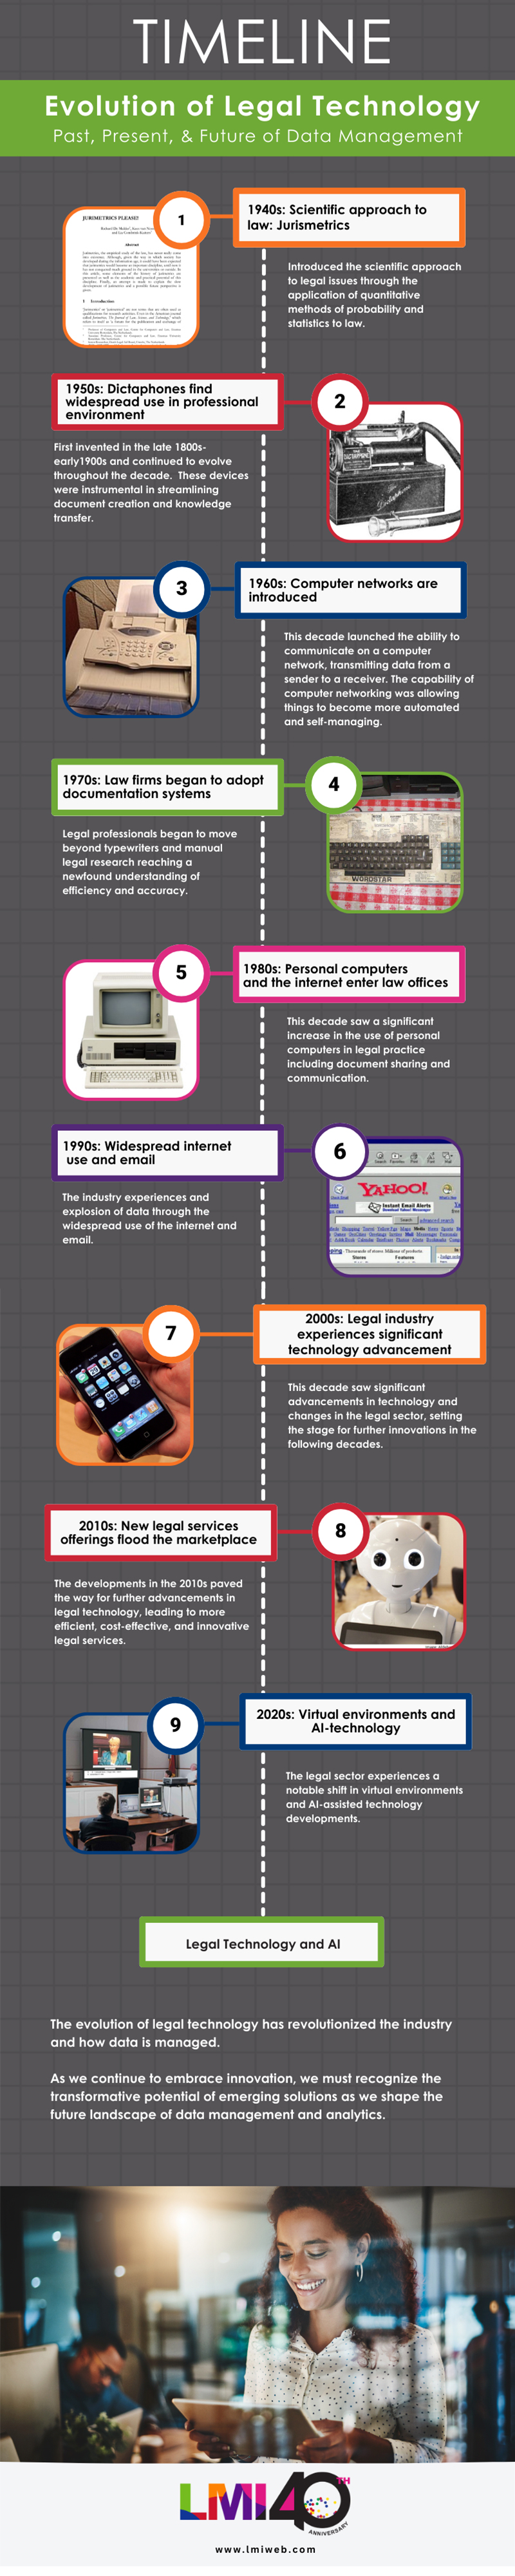 Infographic: Evolution of Legal Technology Timeline